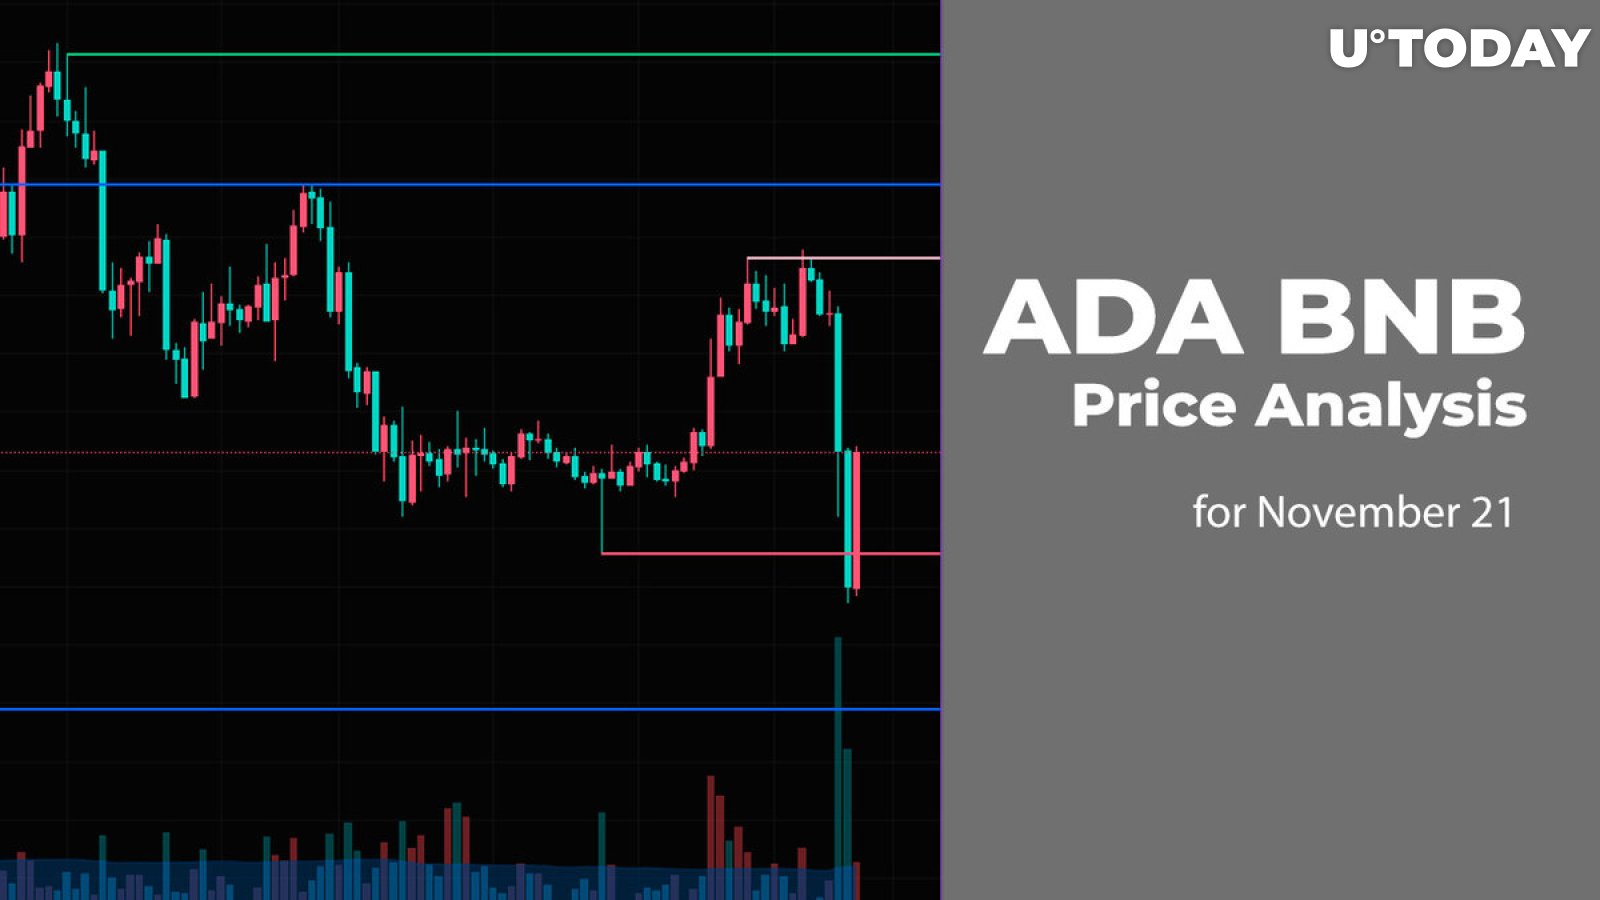 ADA and BNB Price Analysis for November 21